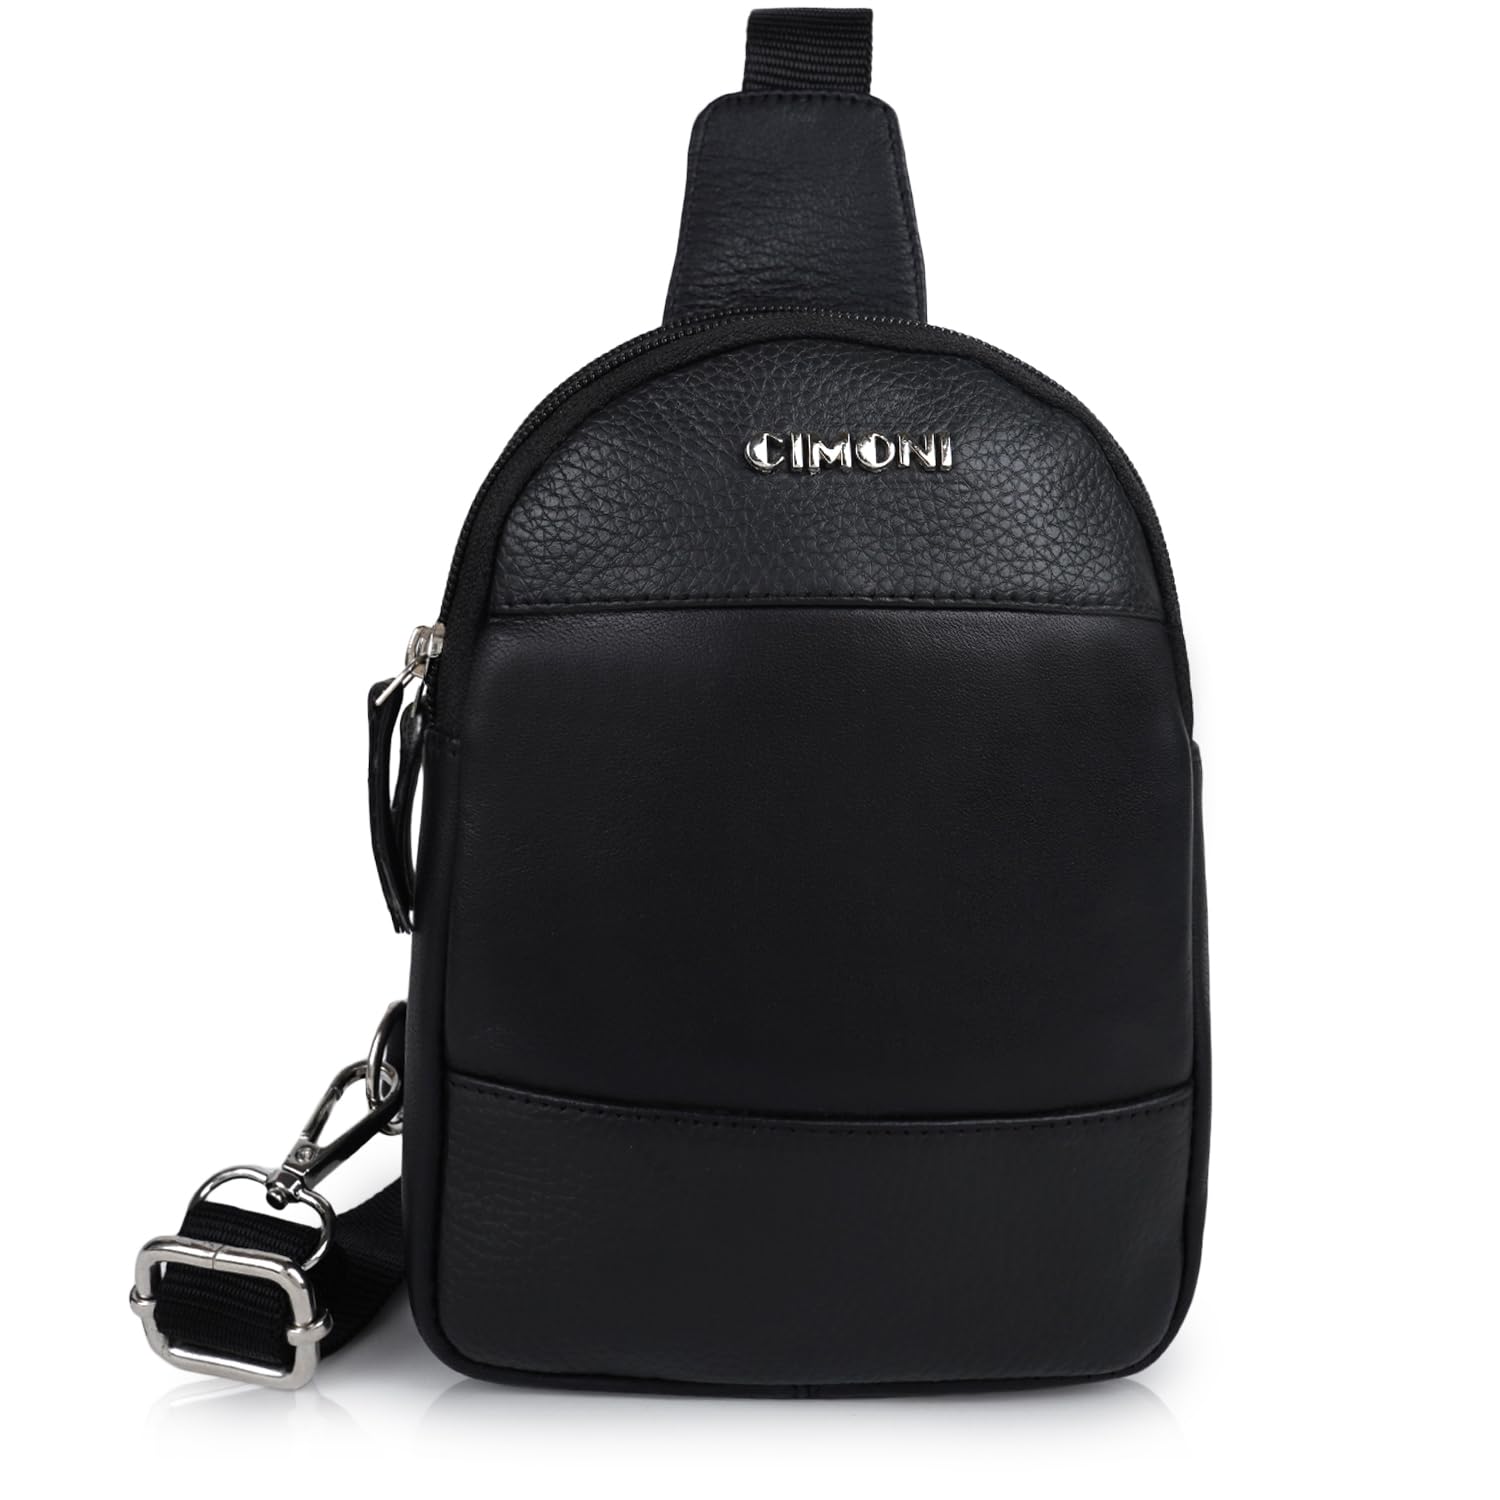 CIMONI® Premium Genuine Leather Sling Bag Classy Trendy Crossbody Bag Shoulder Daytrip Travel Stylish Purse With Adjustable Straps (Color - Black)